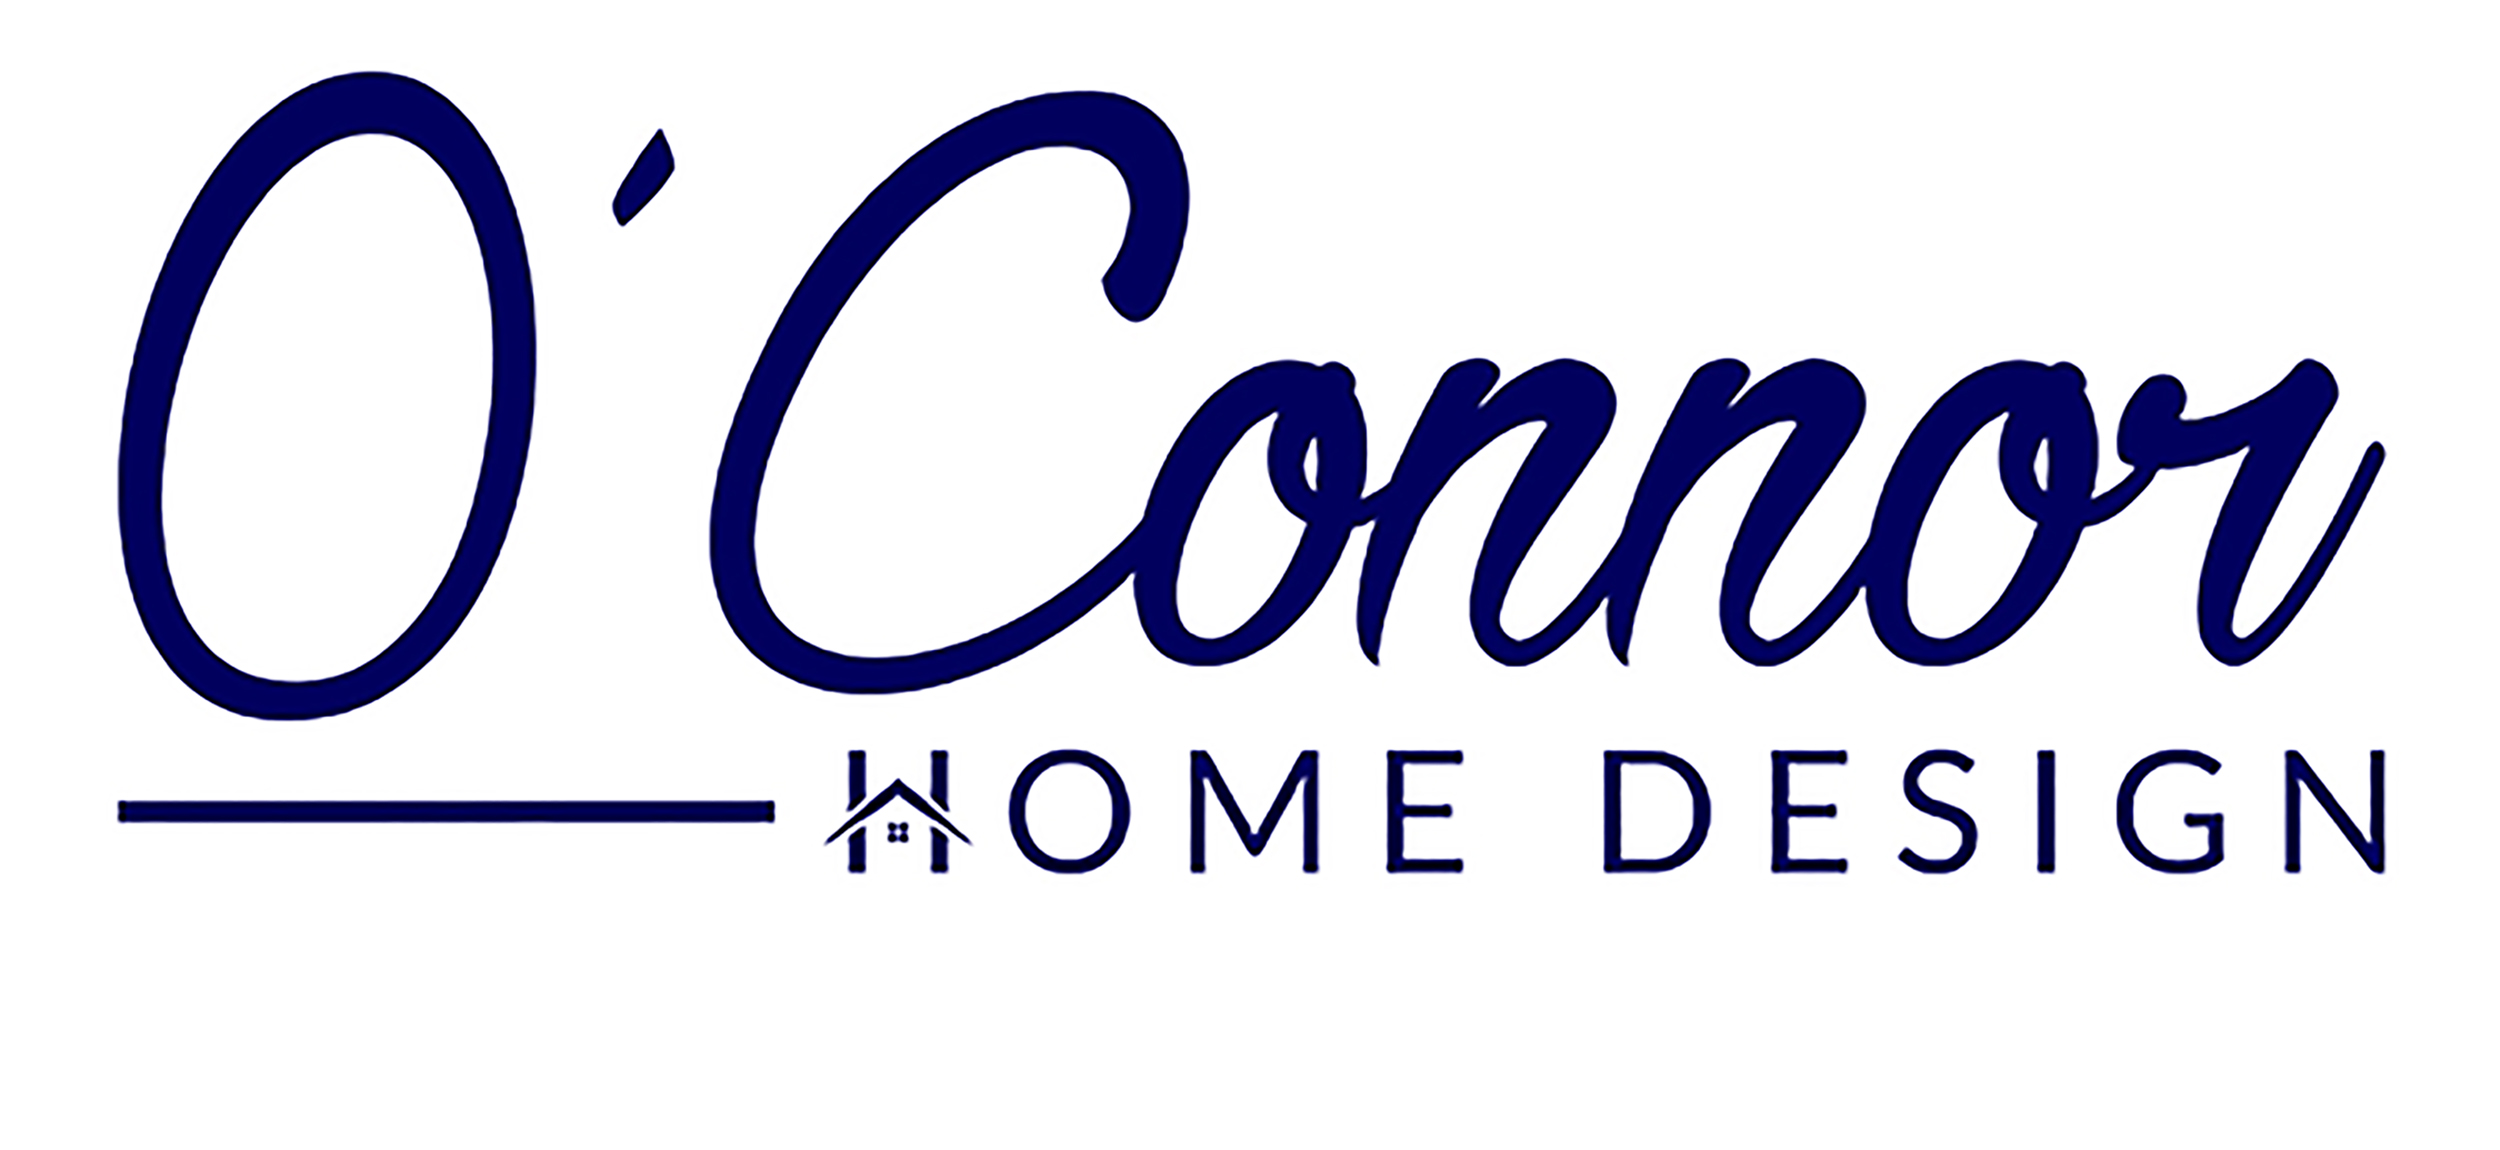 O'Connor Home Design logo